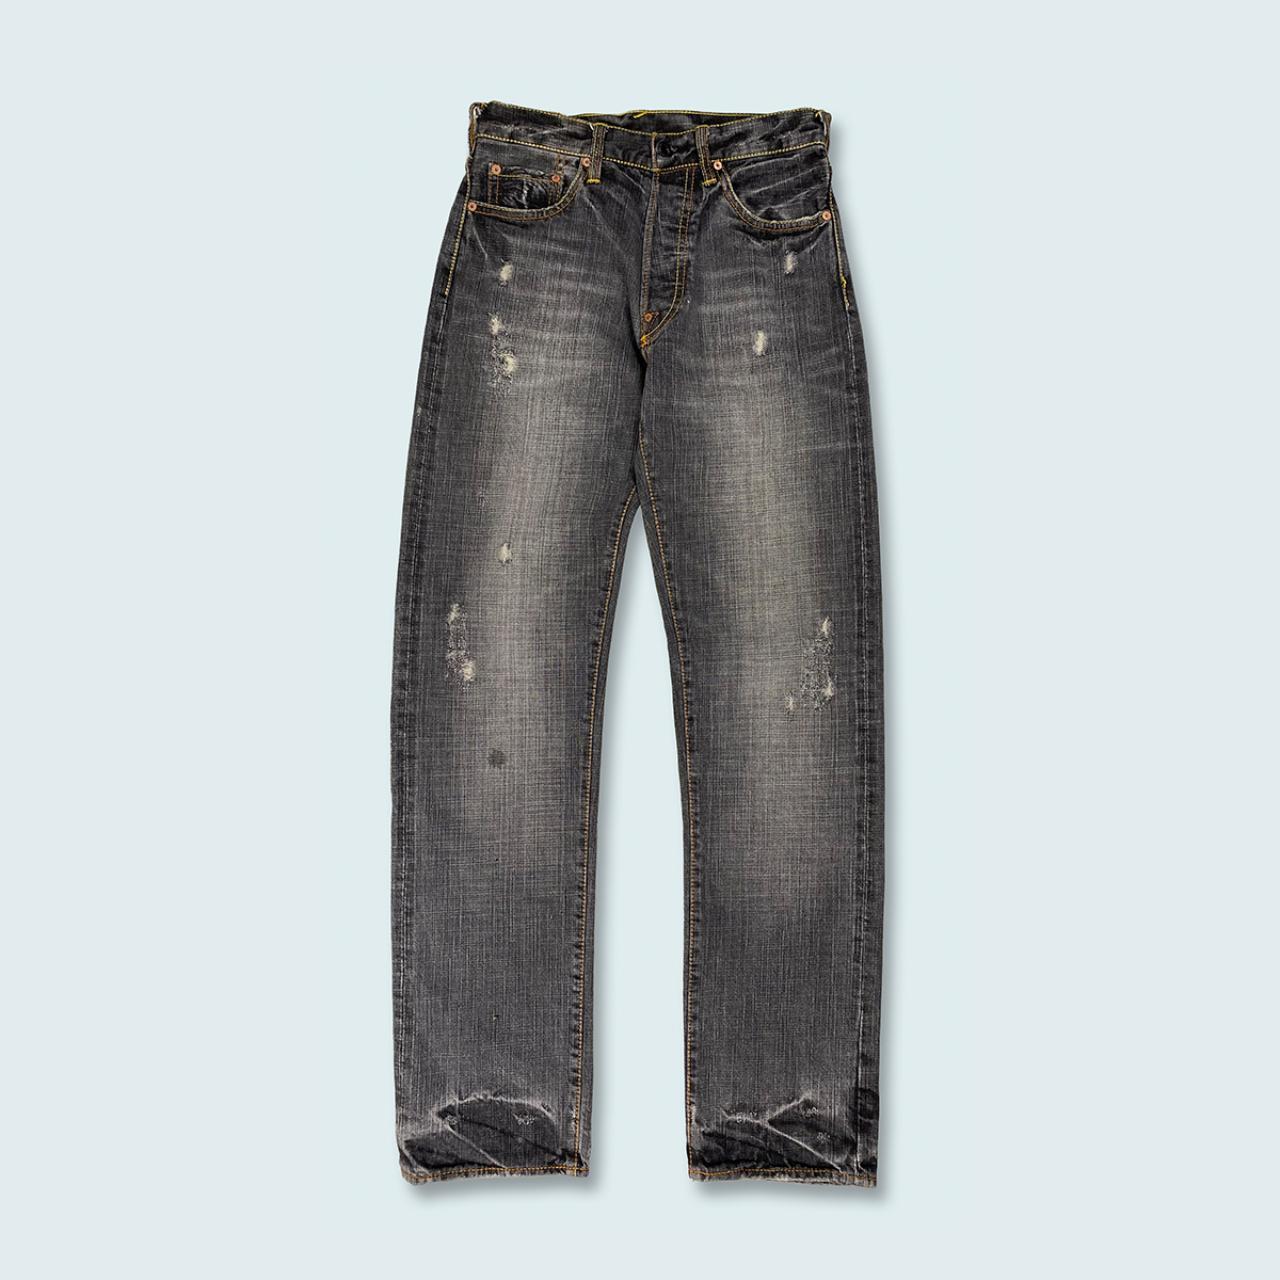 Authentic Vintage RMC Jeans (30")